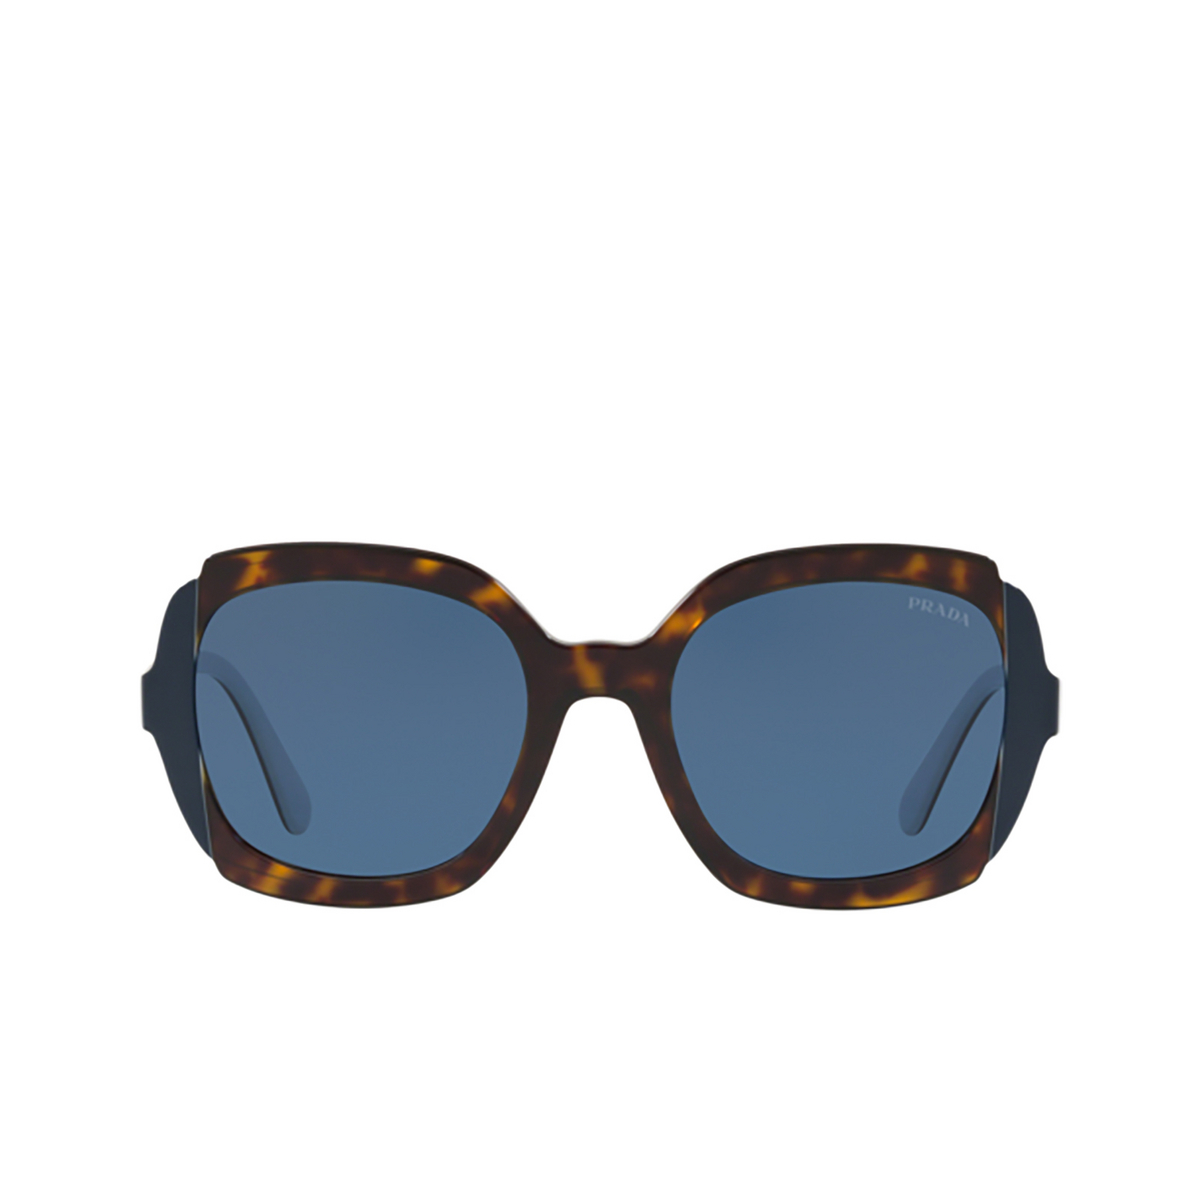 Prada PR 16US Sunglasses W3C1V1 HAVANA / TOP BLUE GREY - front view